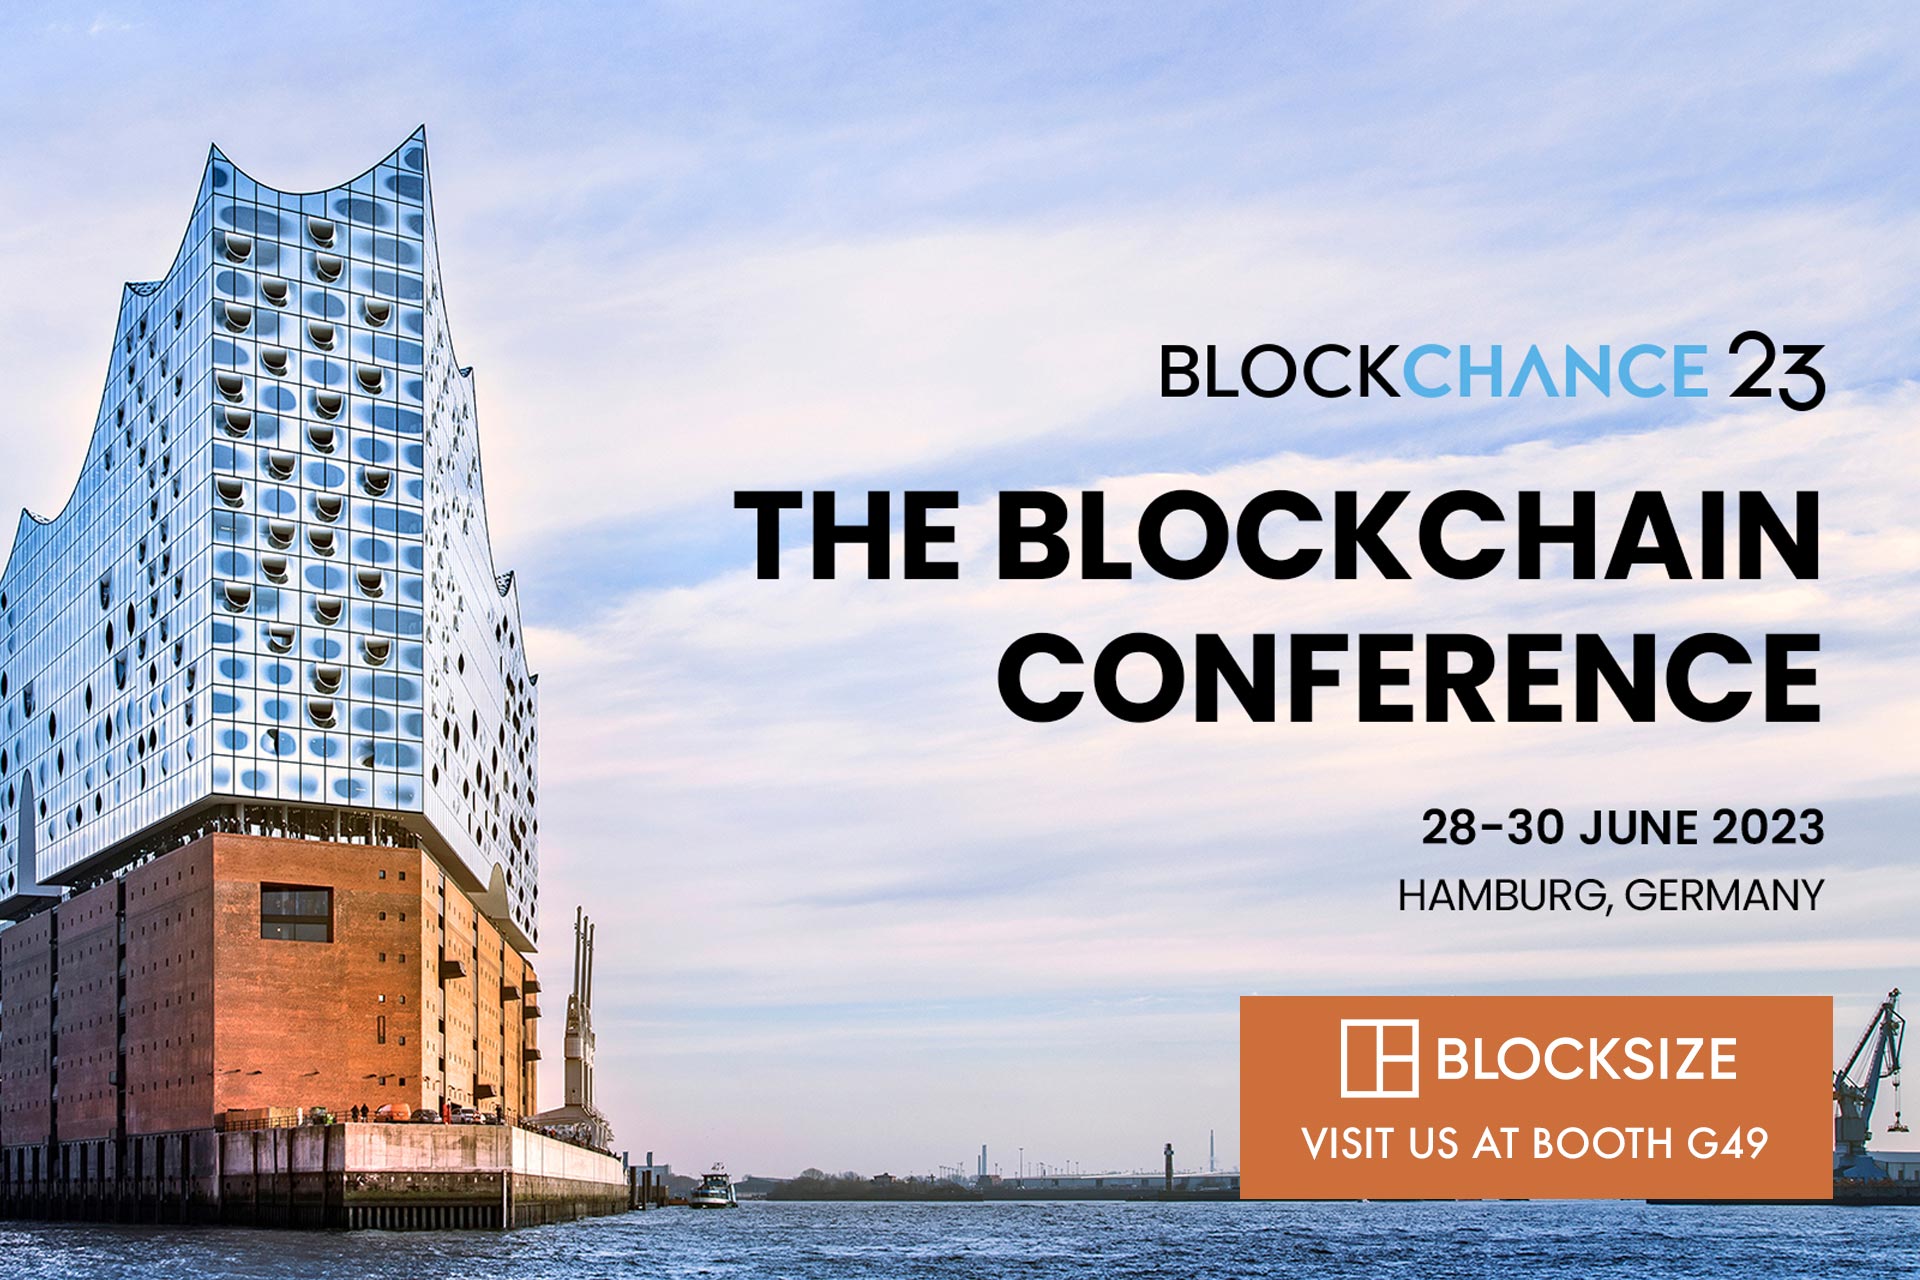 Blockchance 2023 Conference in Hamburg